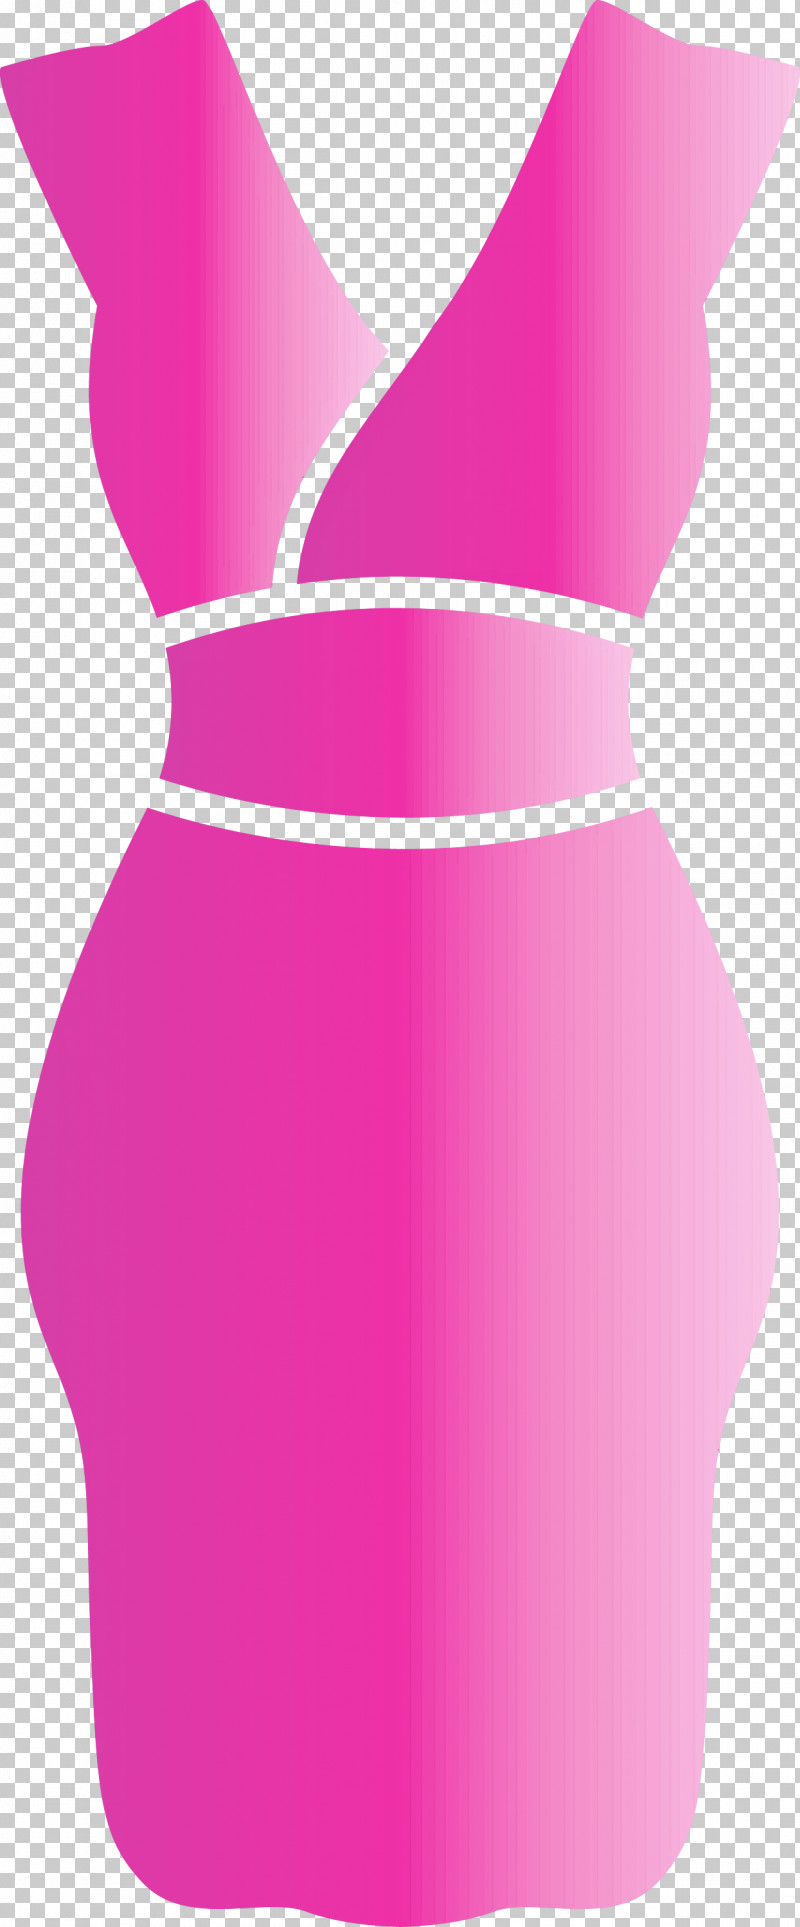 Dress Pink Clothing Cocktail Dress Day Dress PNG, Clipart, Clothing, Cocktail Dress, Day Dress, Dress, Magenta Free PNG Download